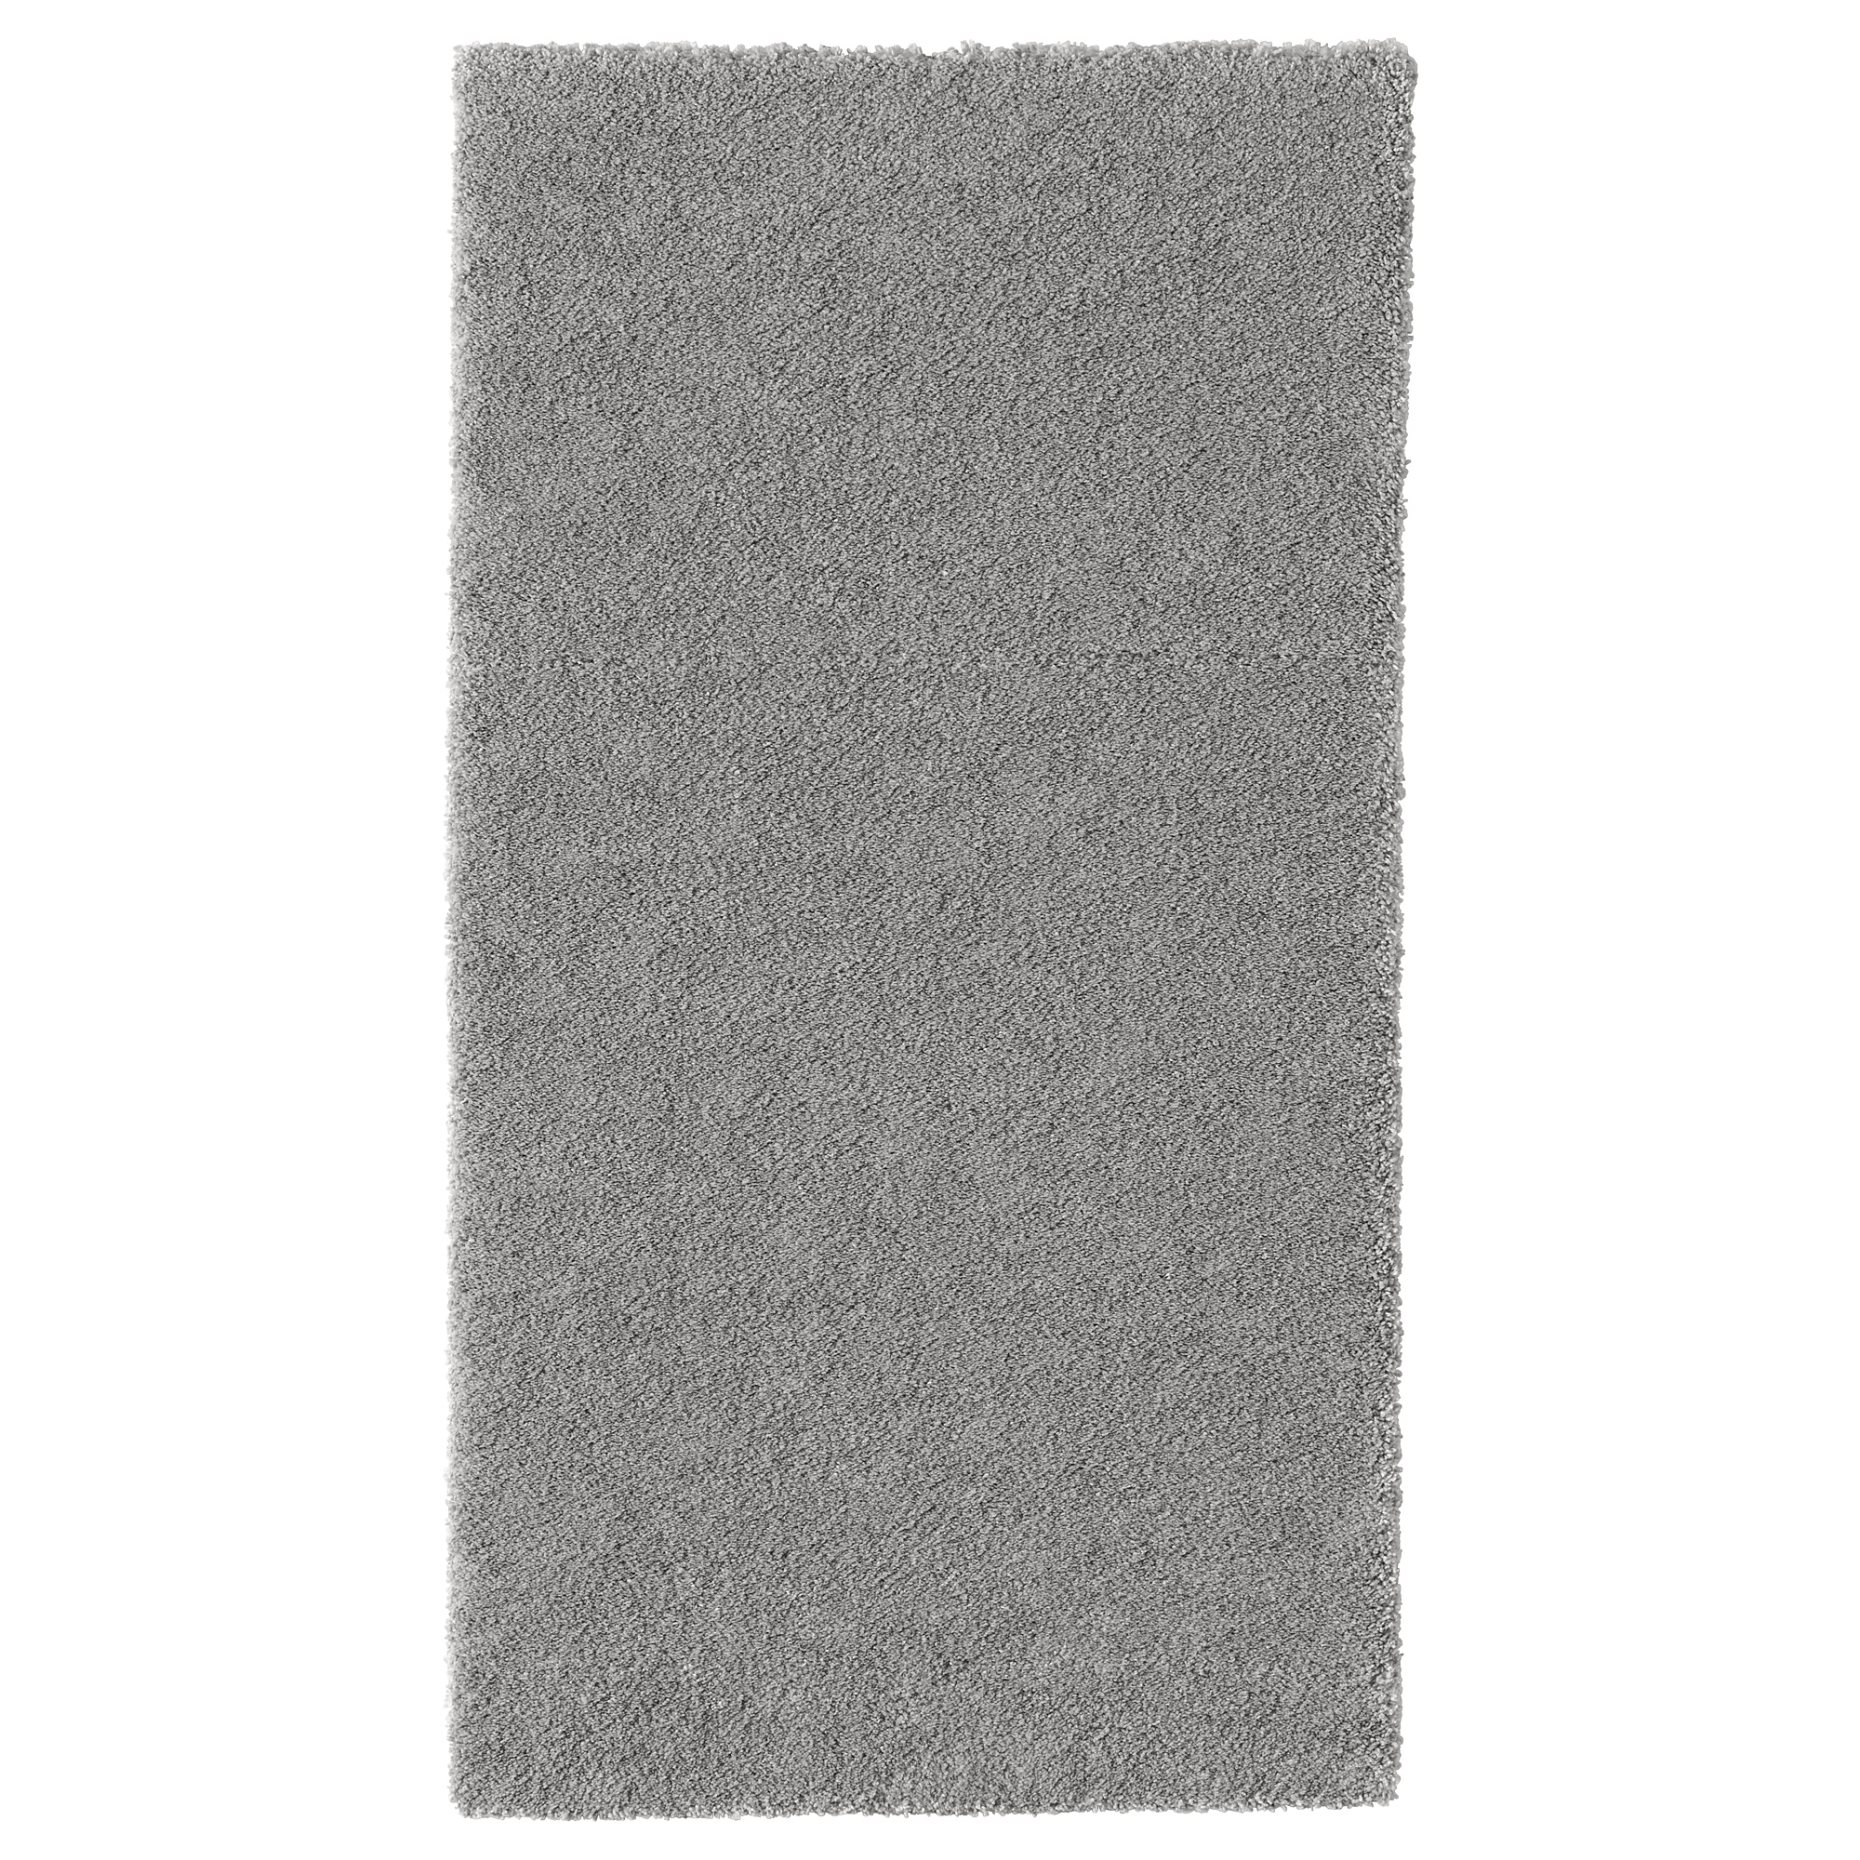 STOENSE, rug low pile, 80x150 cm, 504.268.35